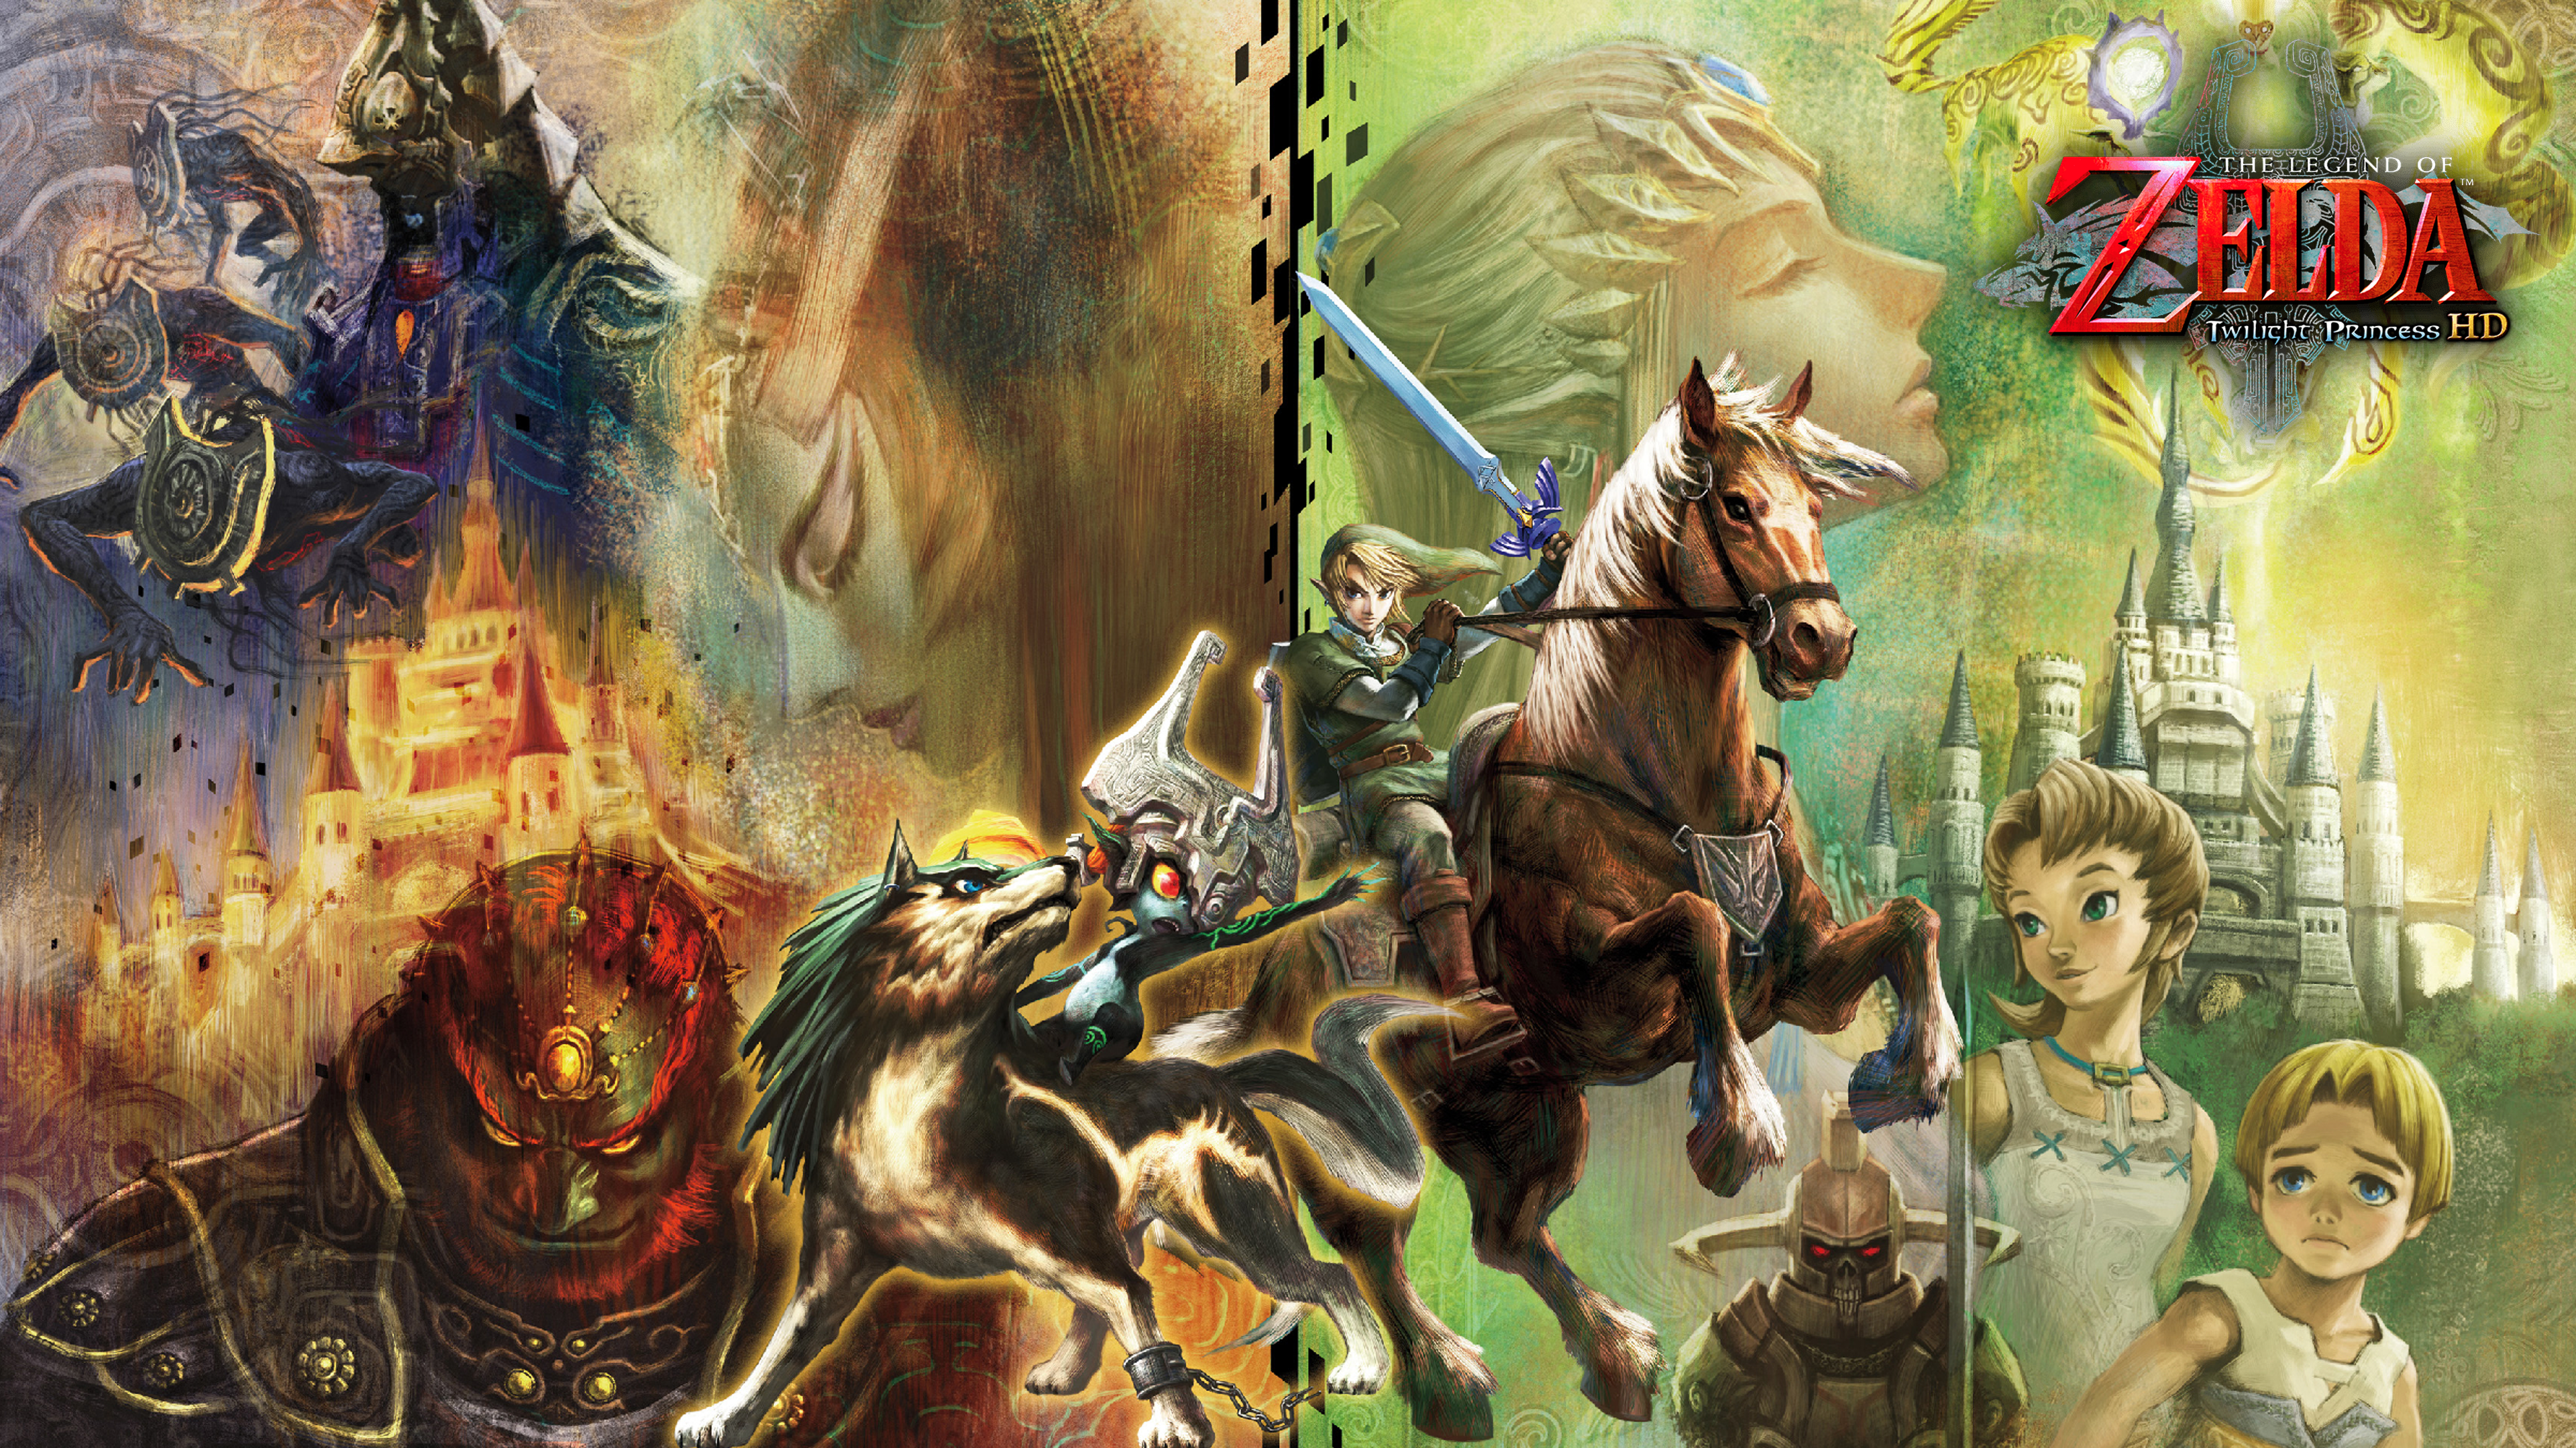 The Legend of Zelda Twilight Princess HD 4K Wallpaper by